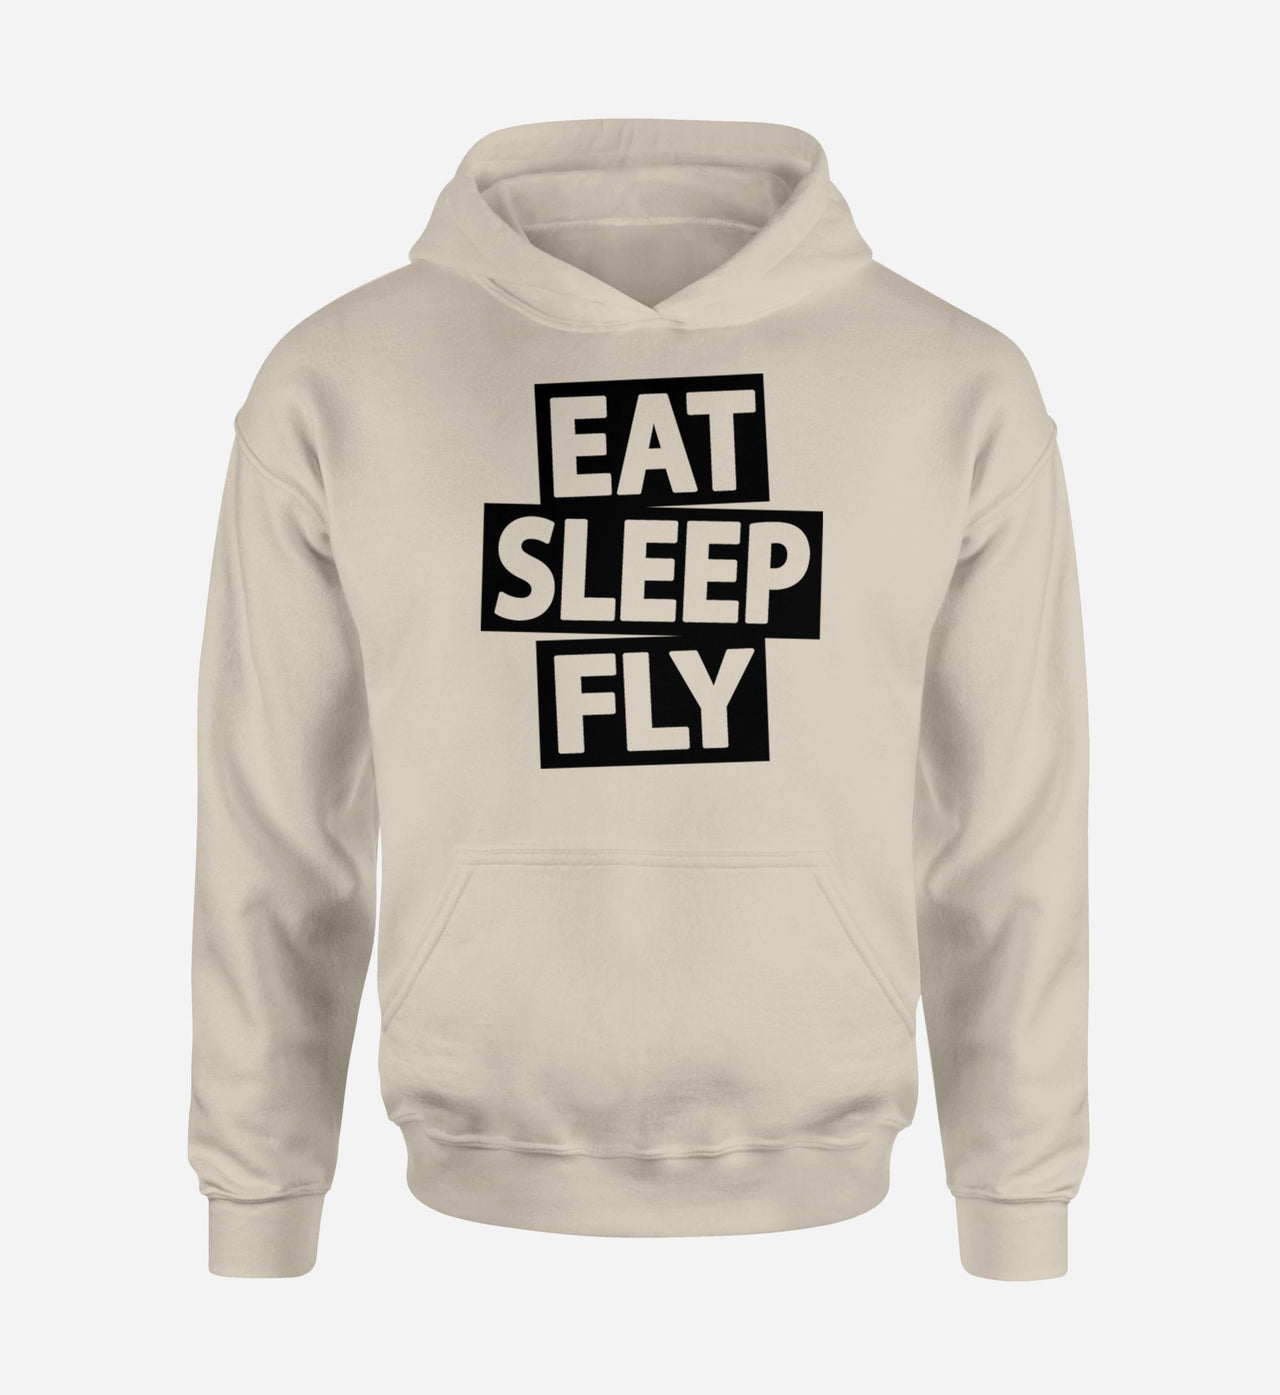 Eat Sleep Fly Designed Hoodies